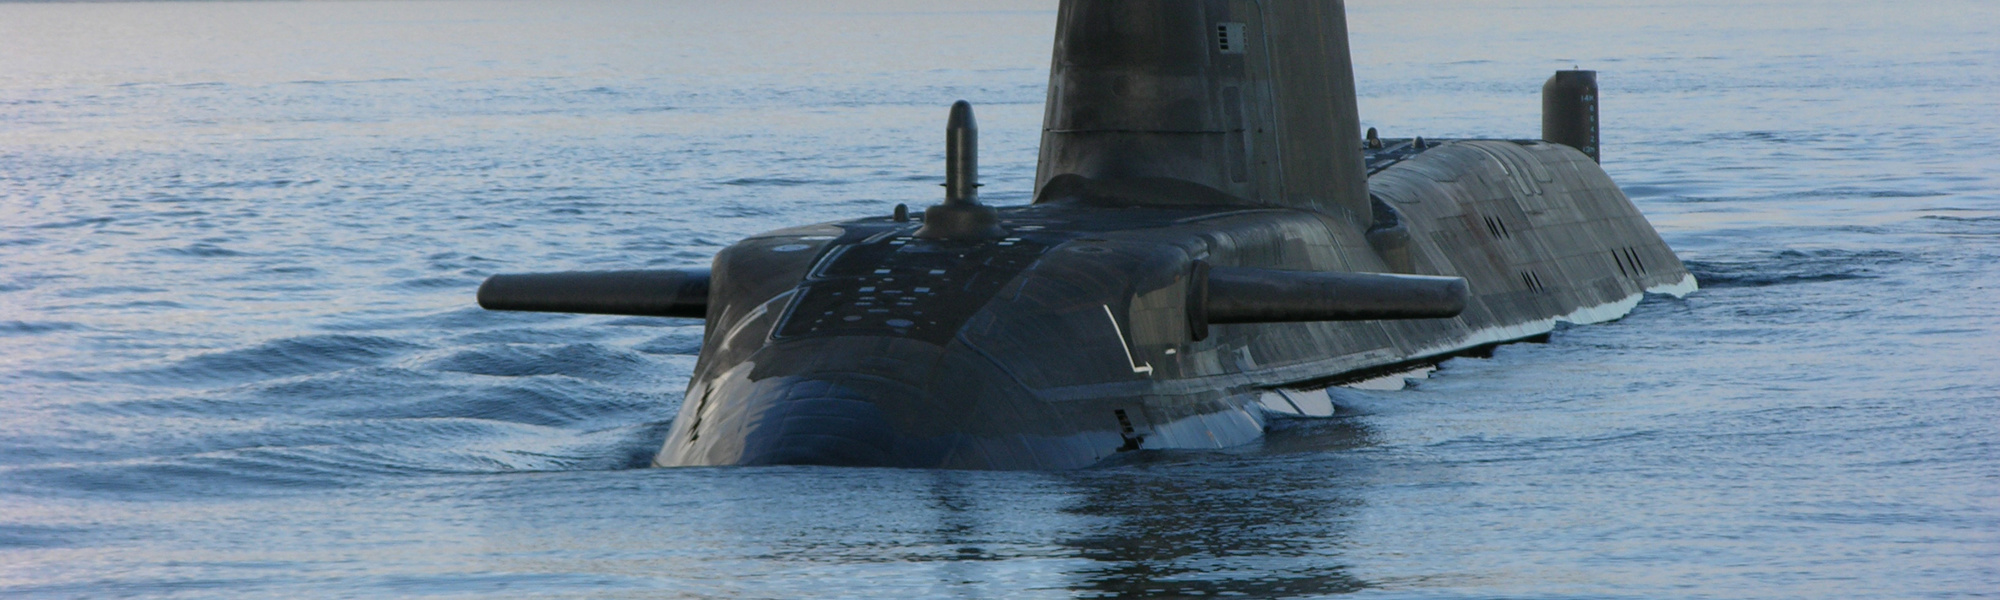 Astute Submarine 4